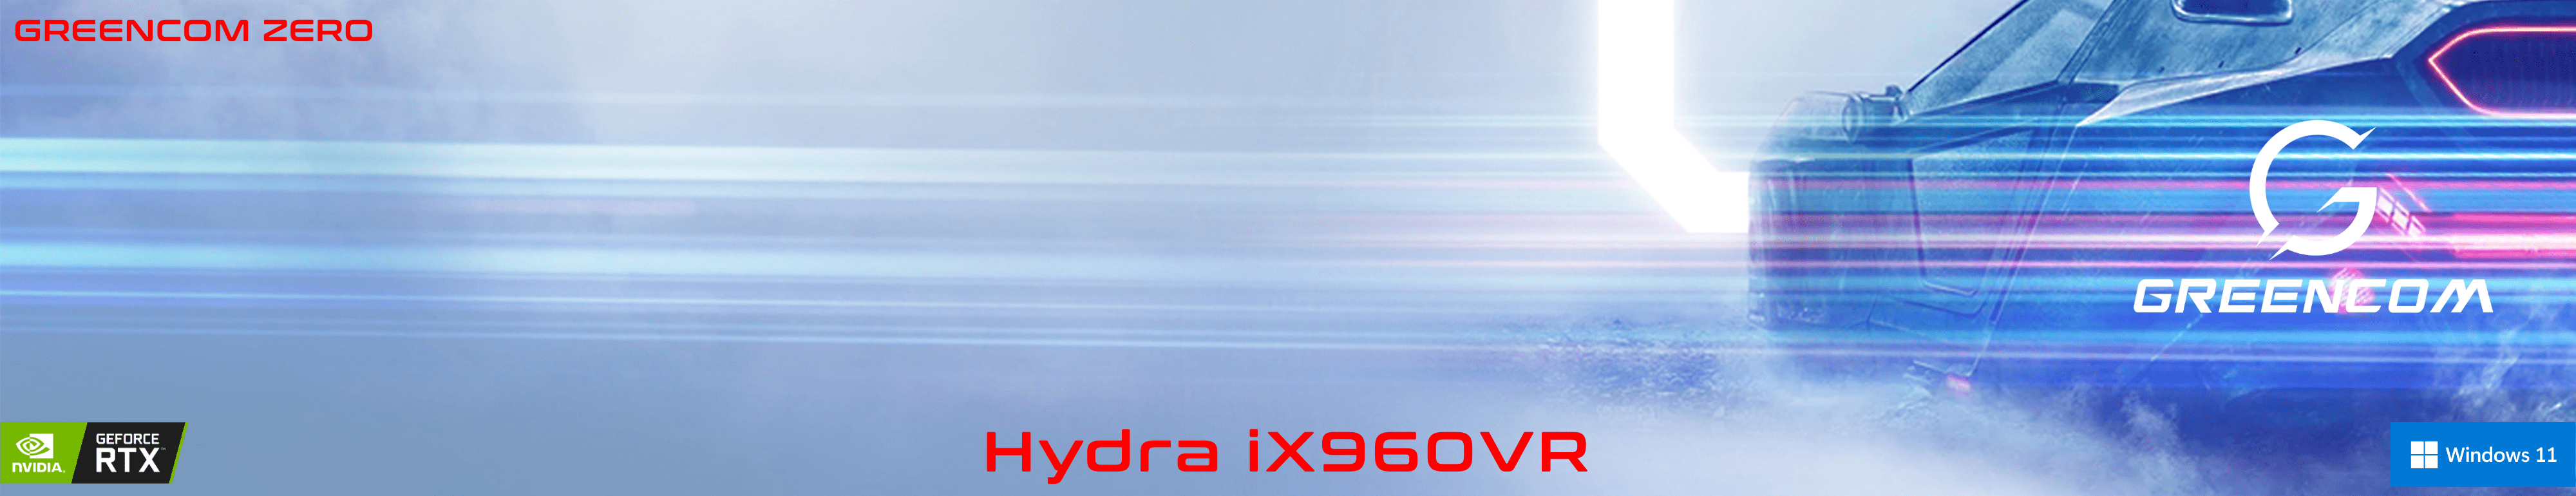 Hydra iX960VR Laptop